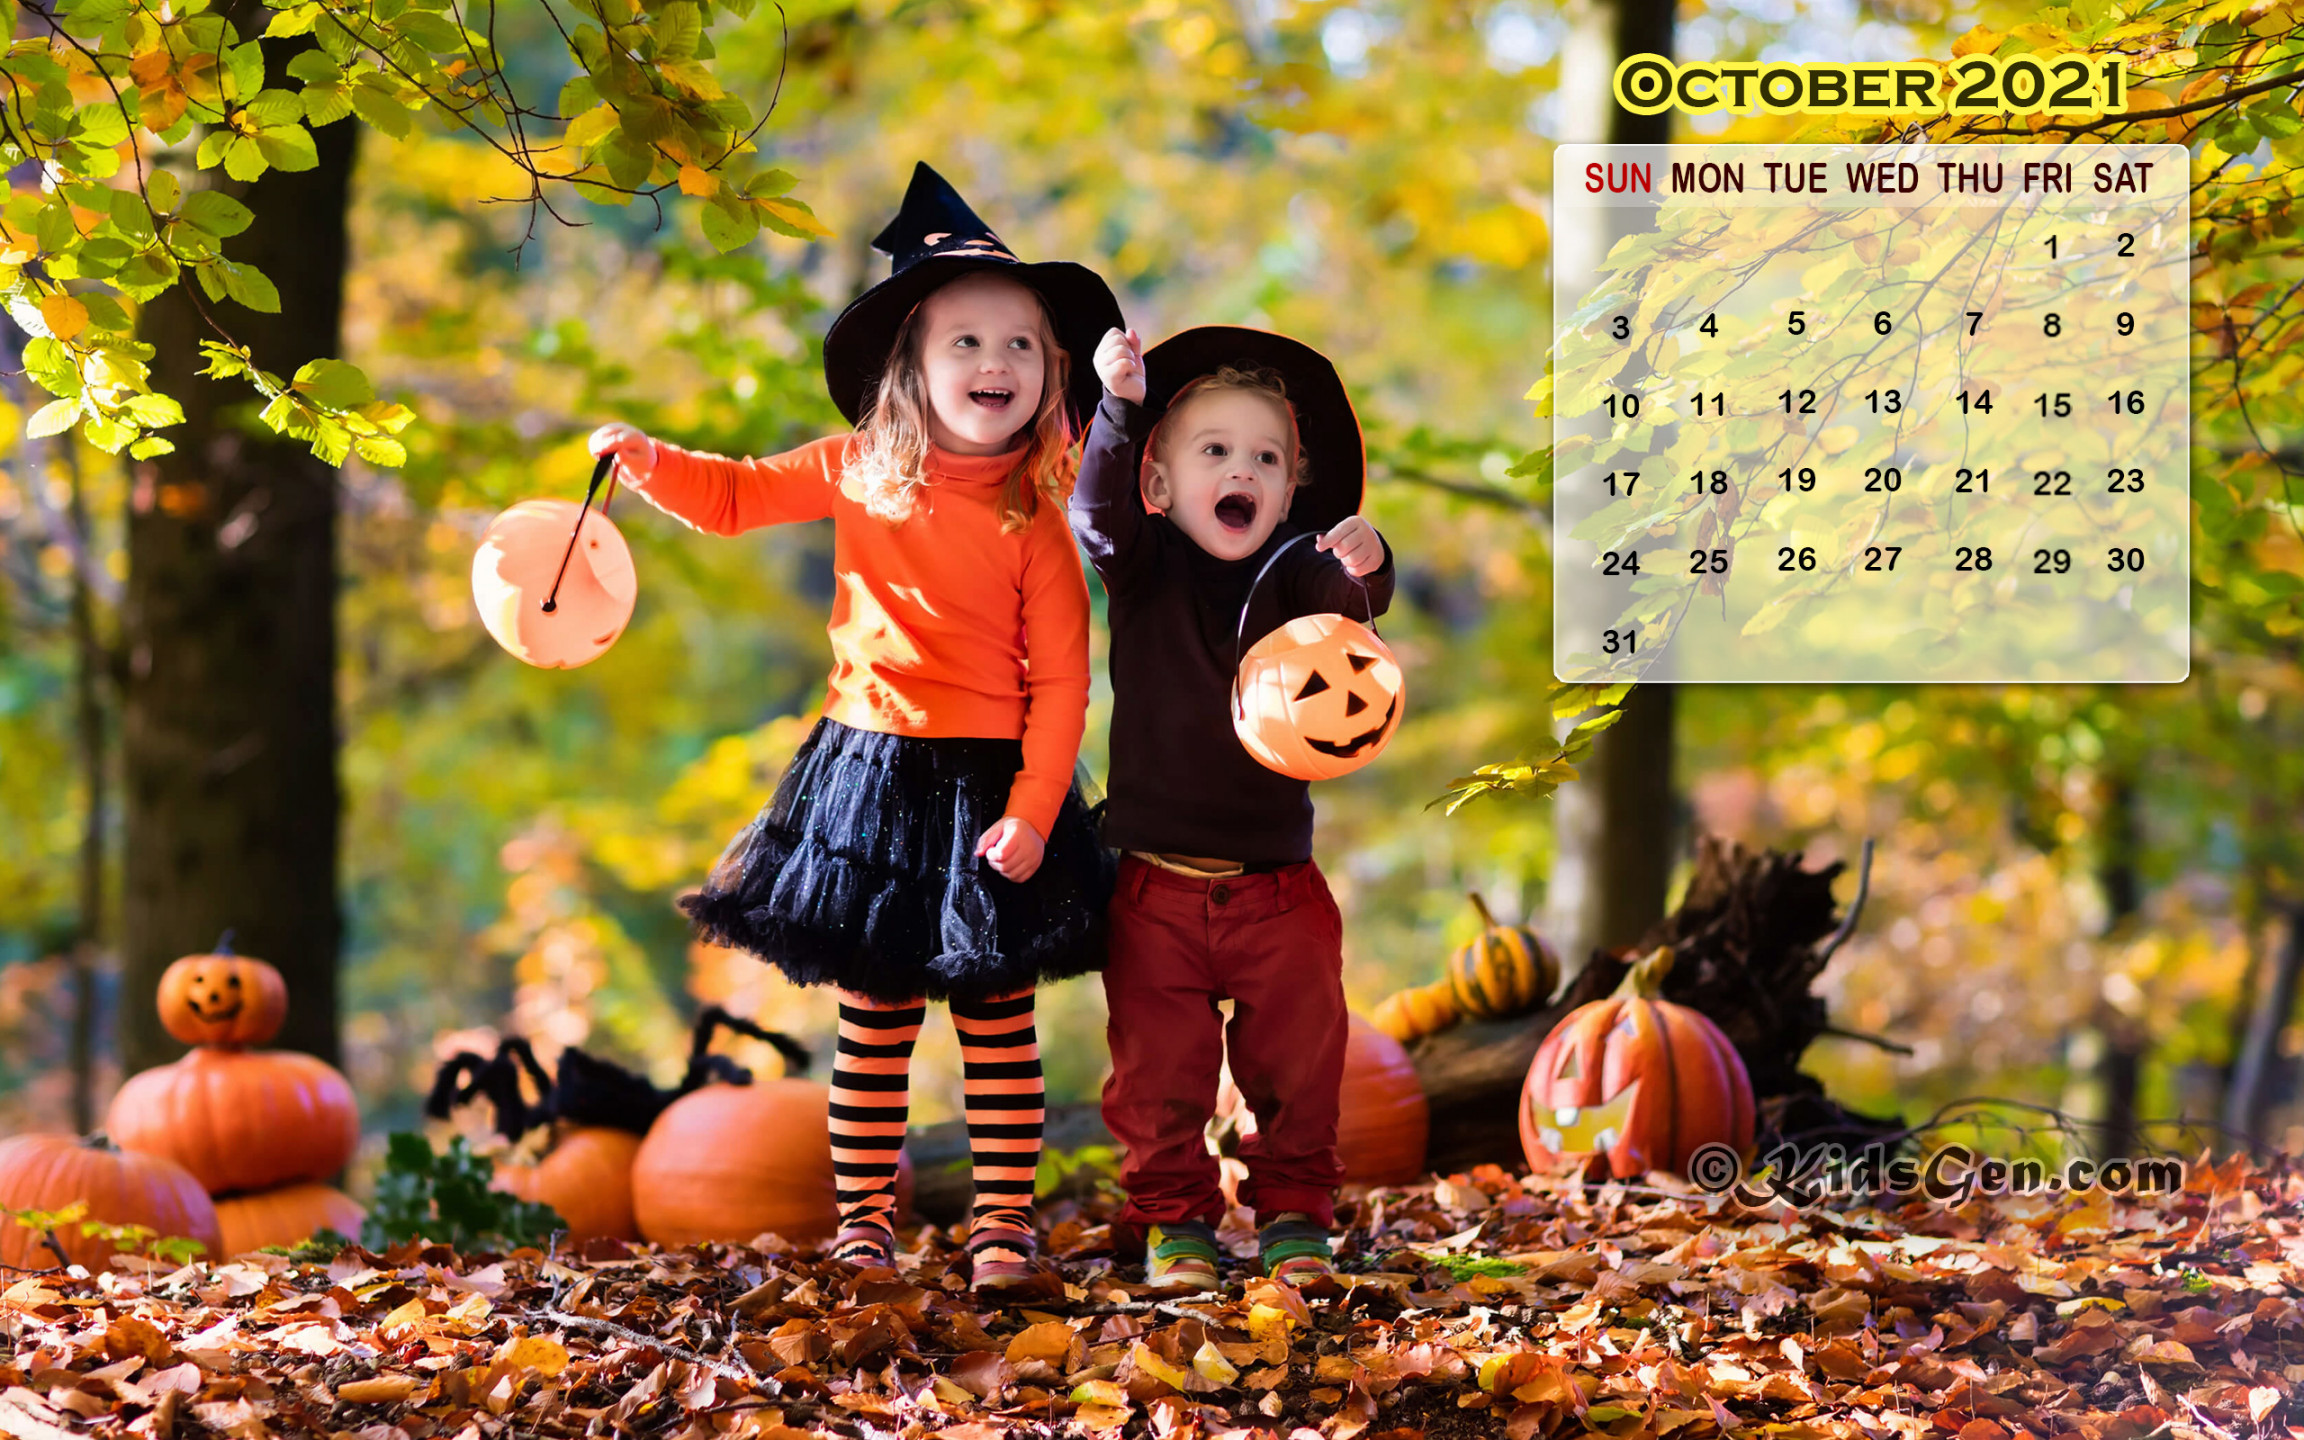 October 2021 Calendar Wallpaper Free October 2021 Calendar Background